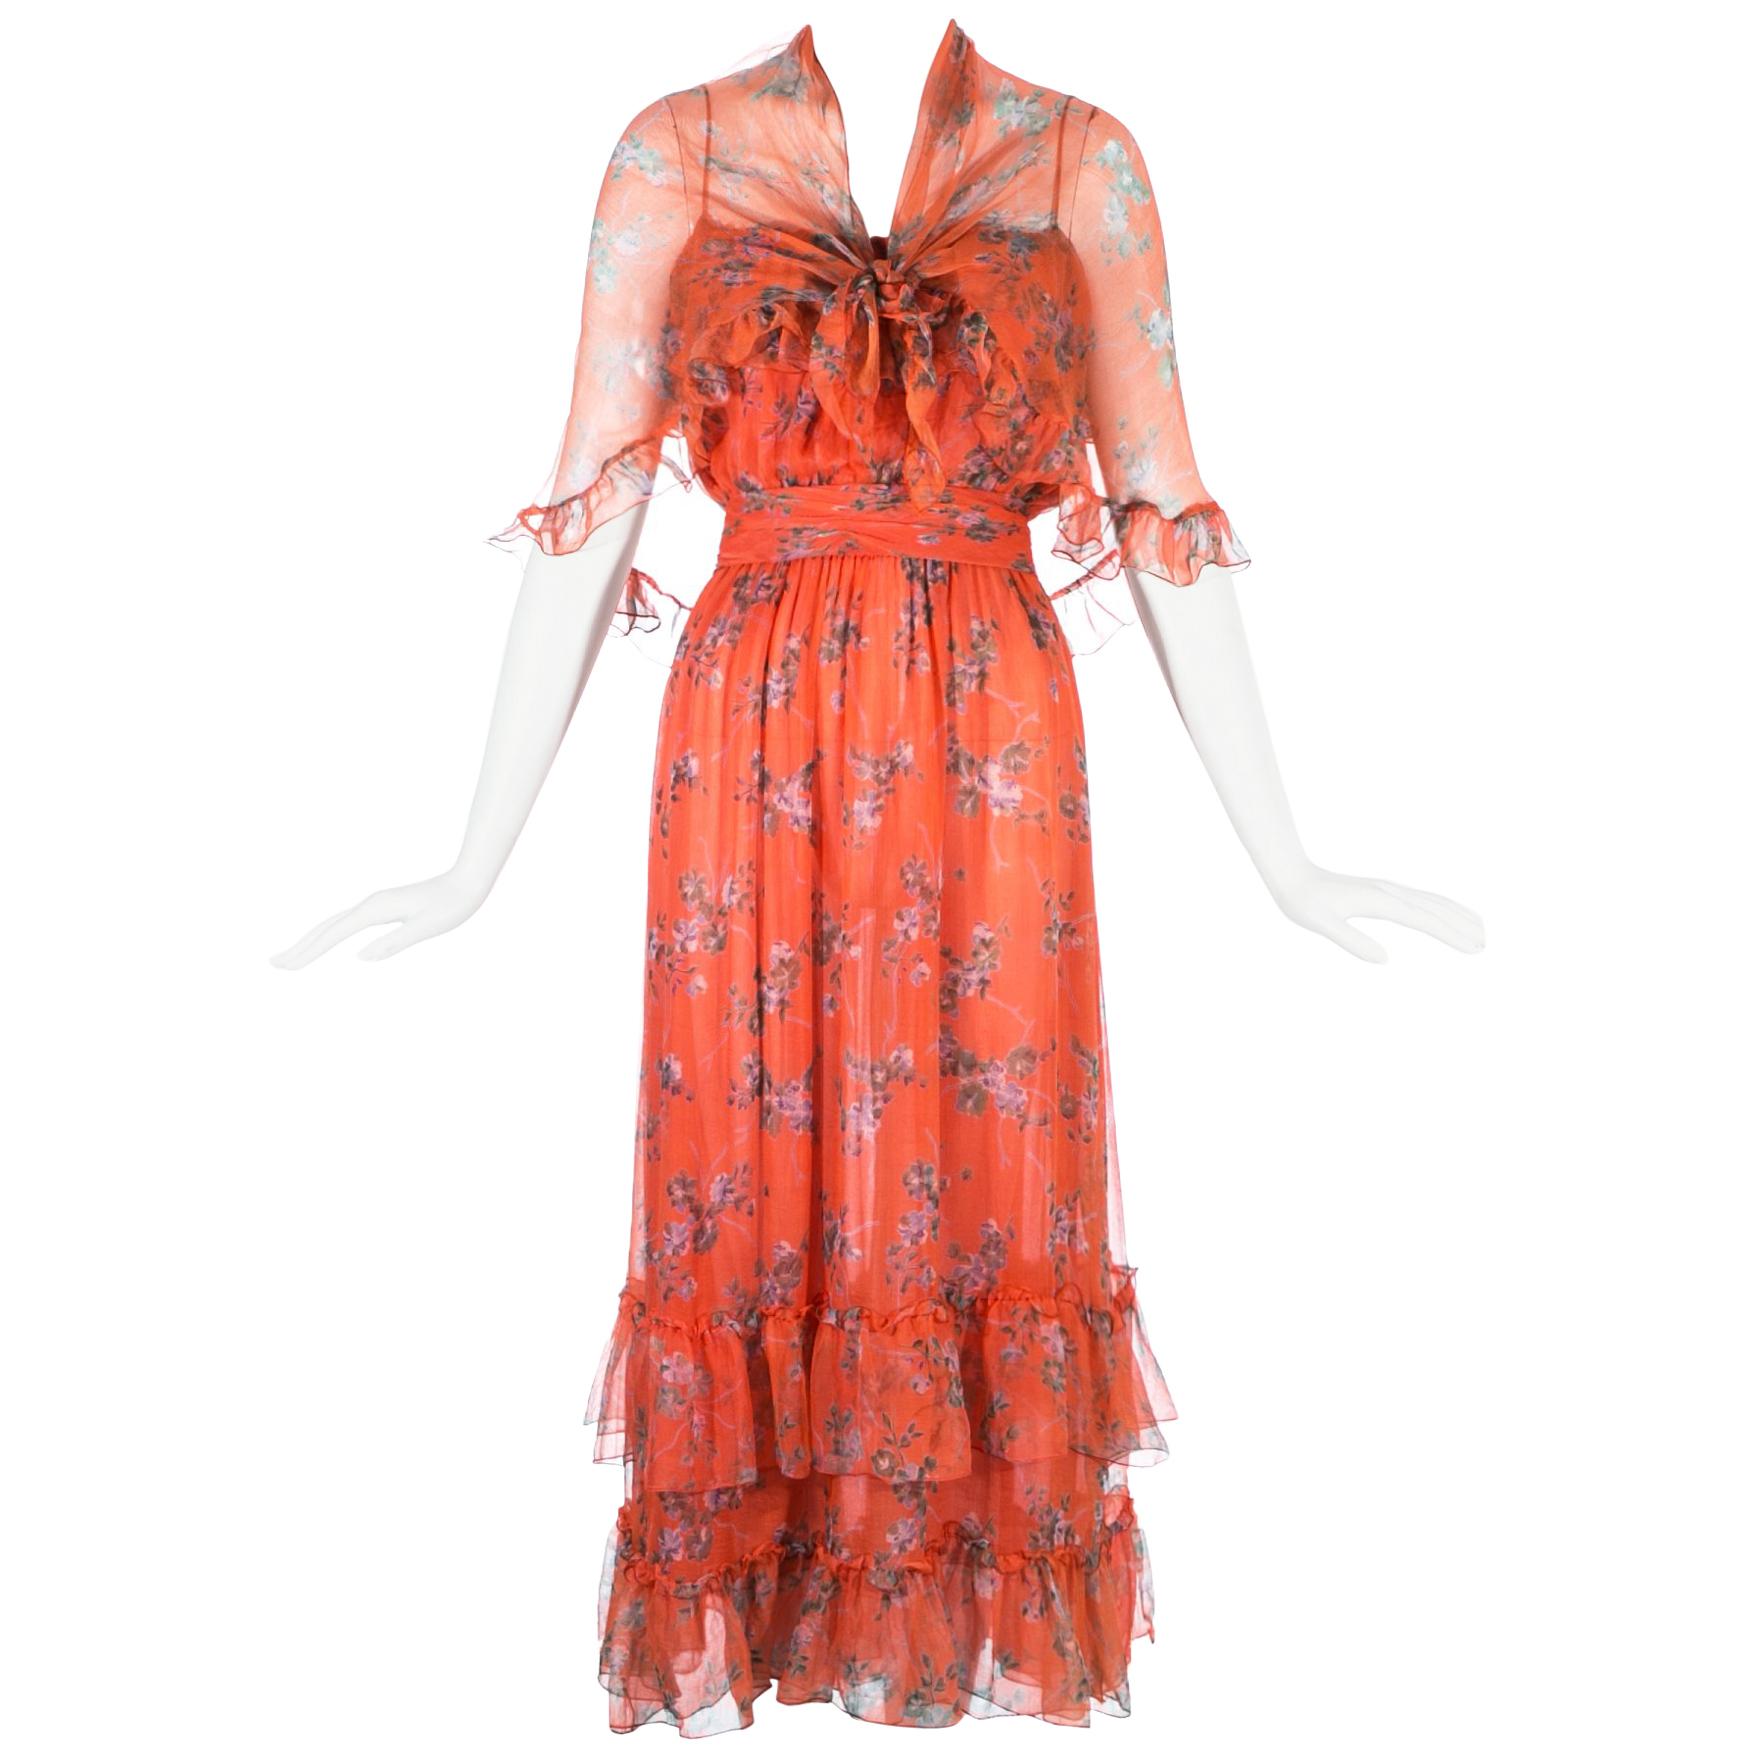 Bellville Sassoon orange floral silk chiffon summer dress with scarf, c. 1970s